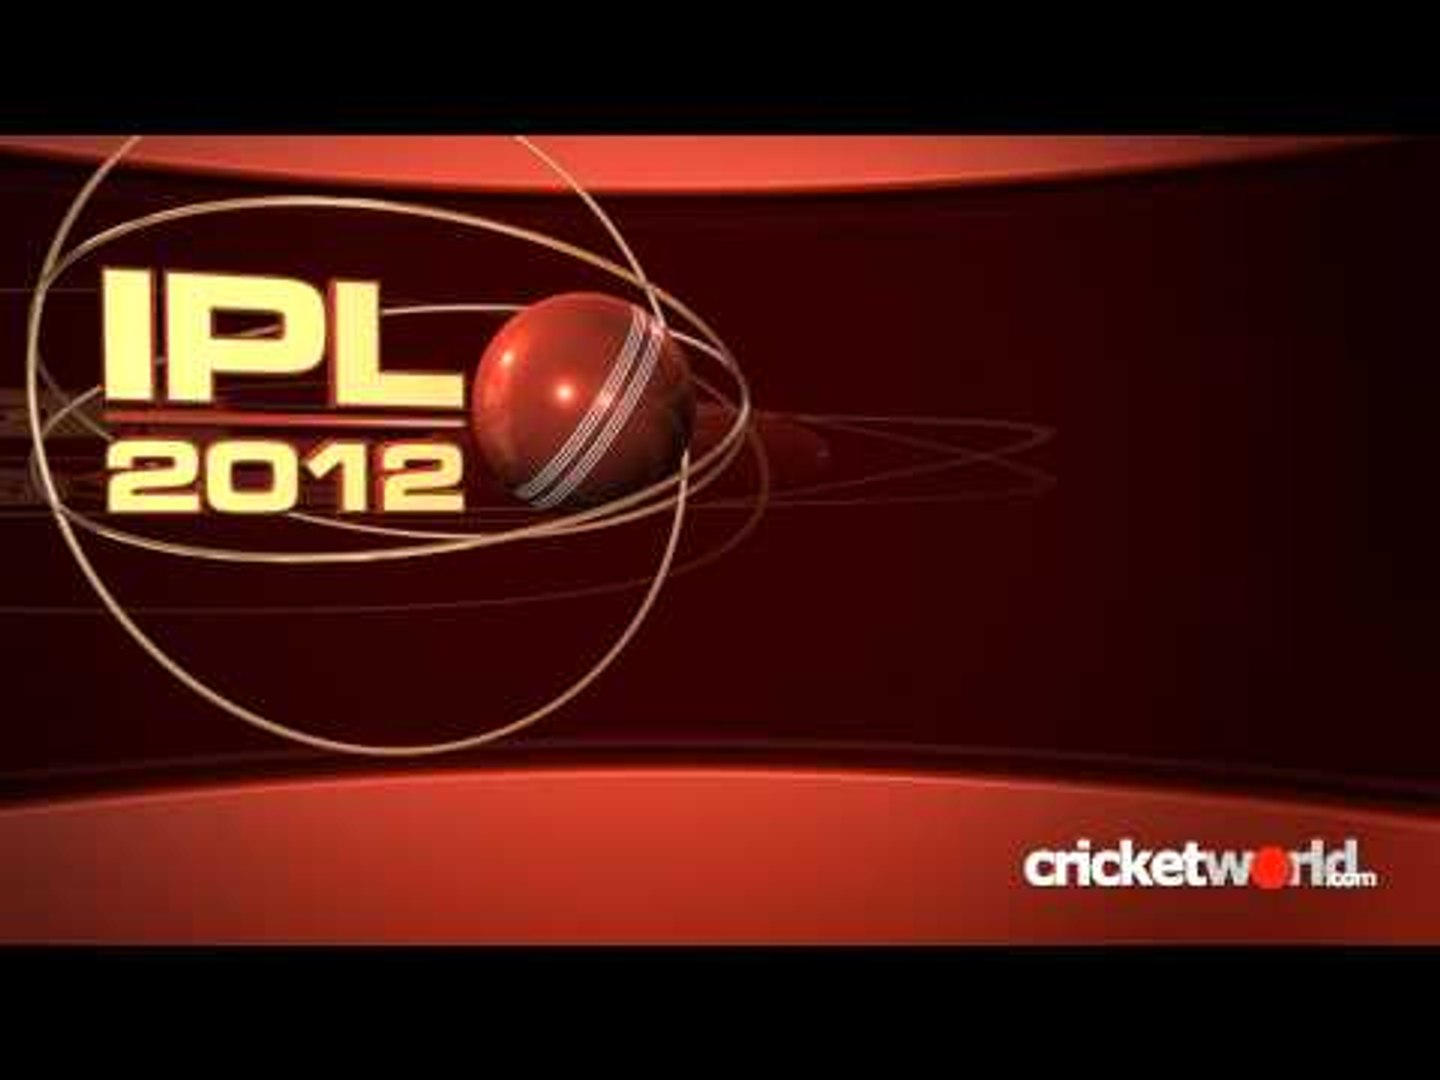 Cricket Podcast - IPL 2012 Final Review - Cricket World